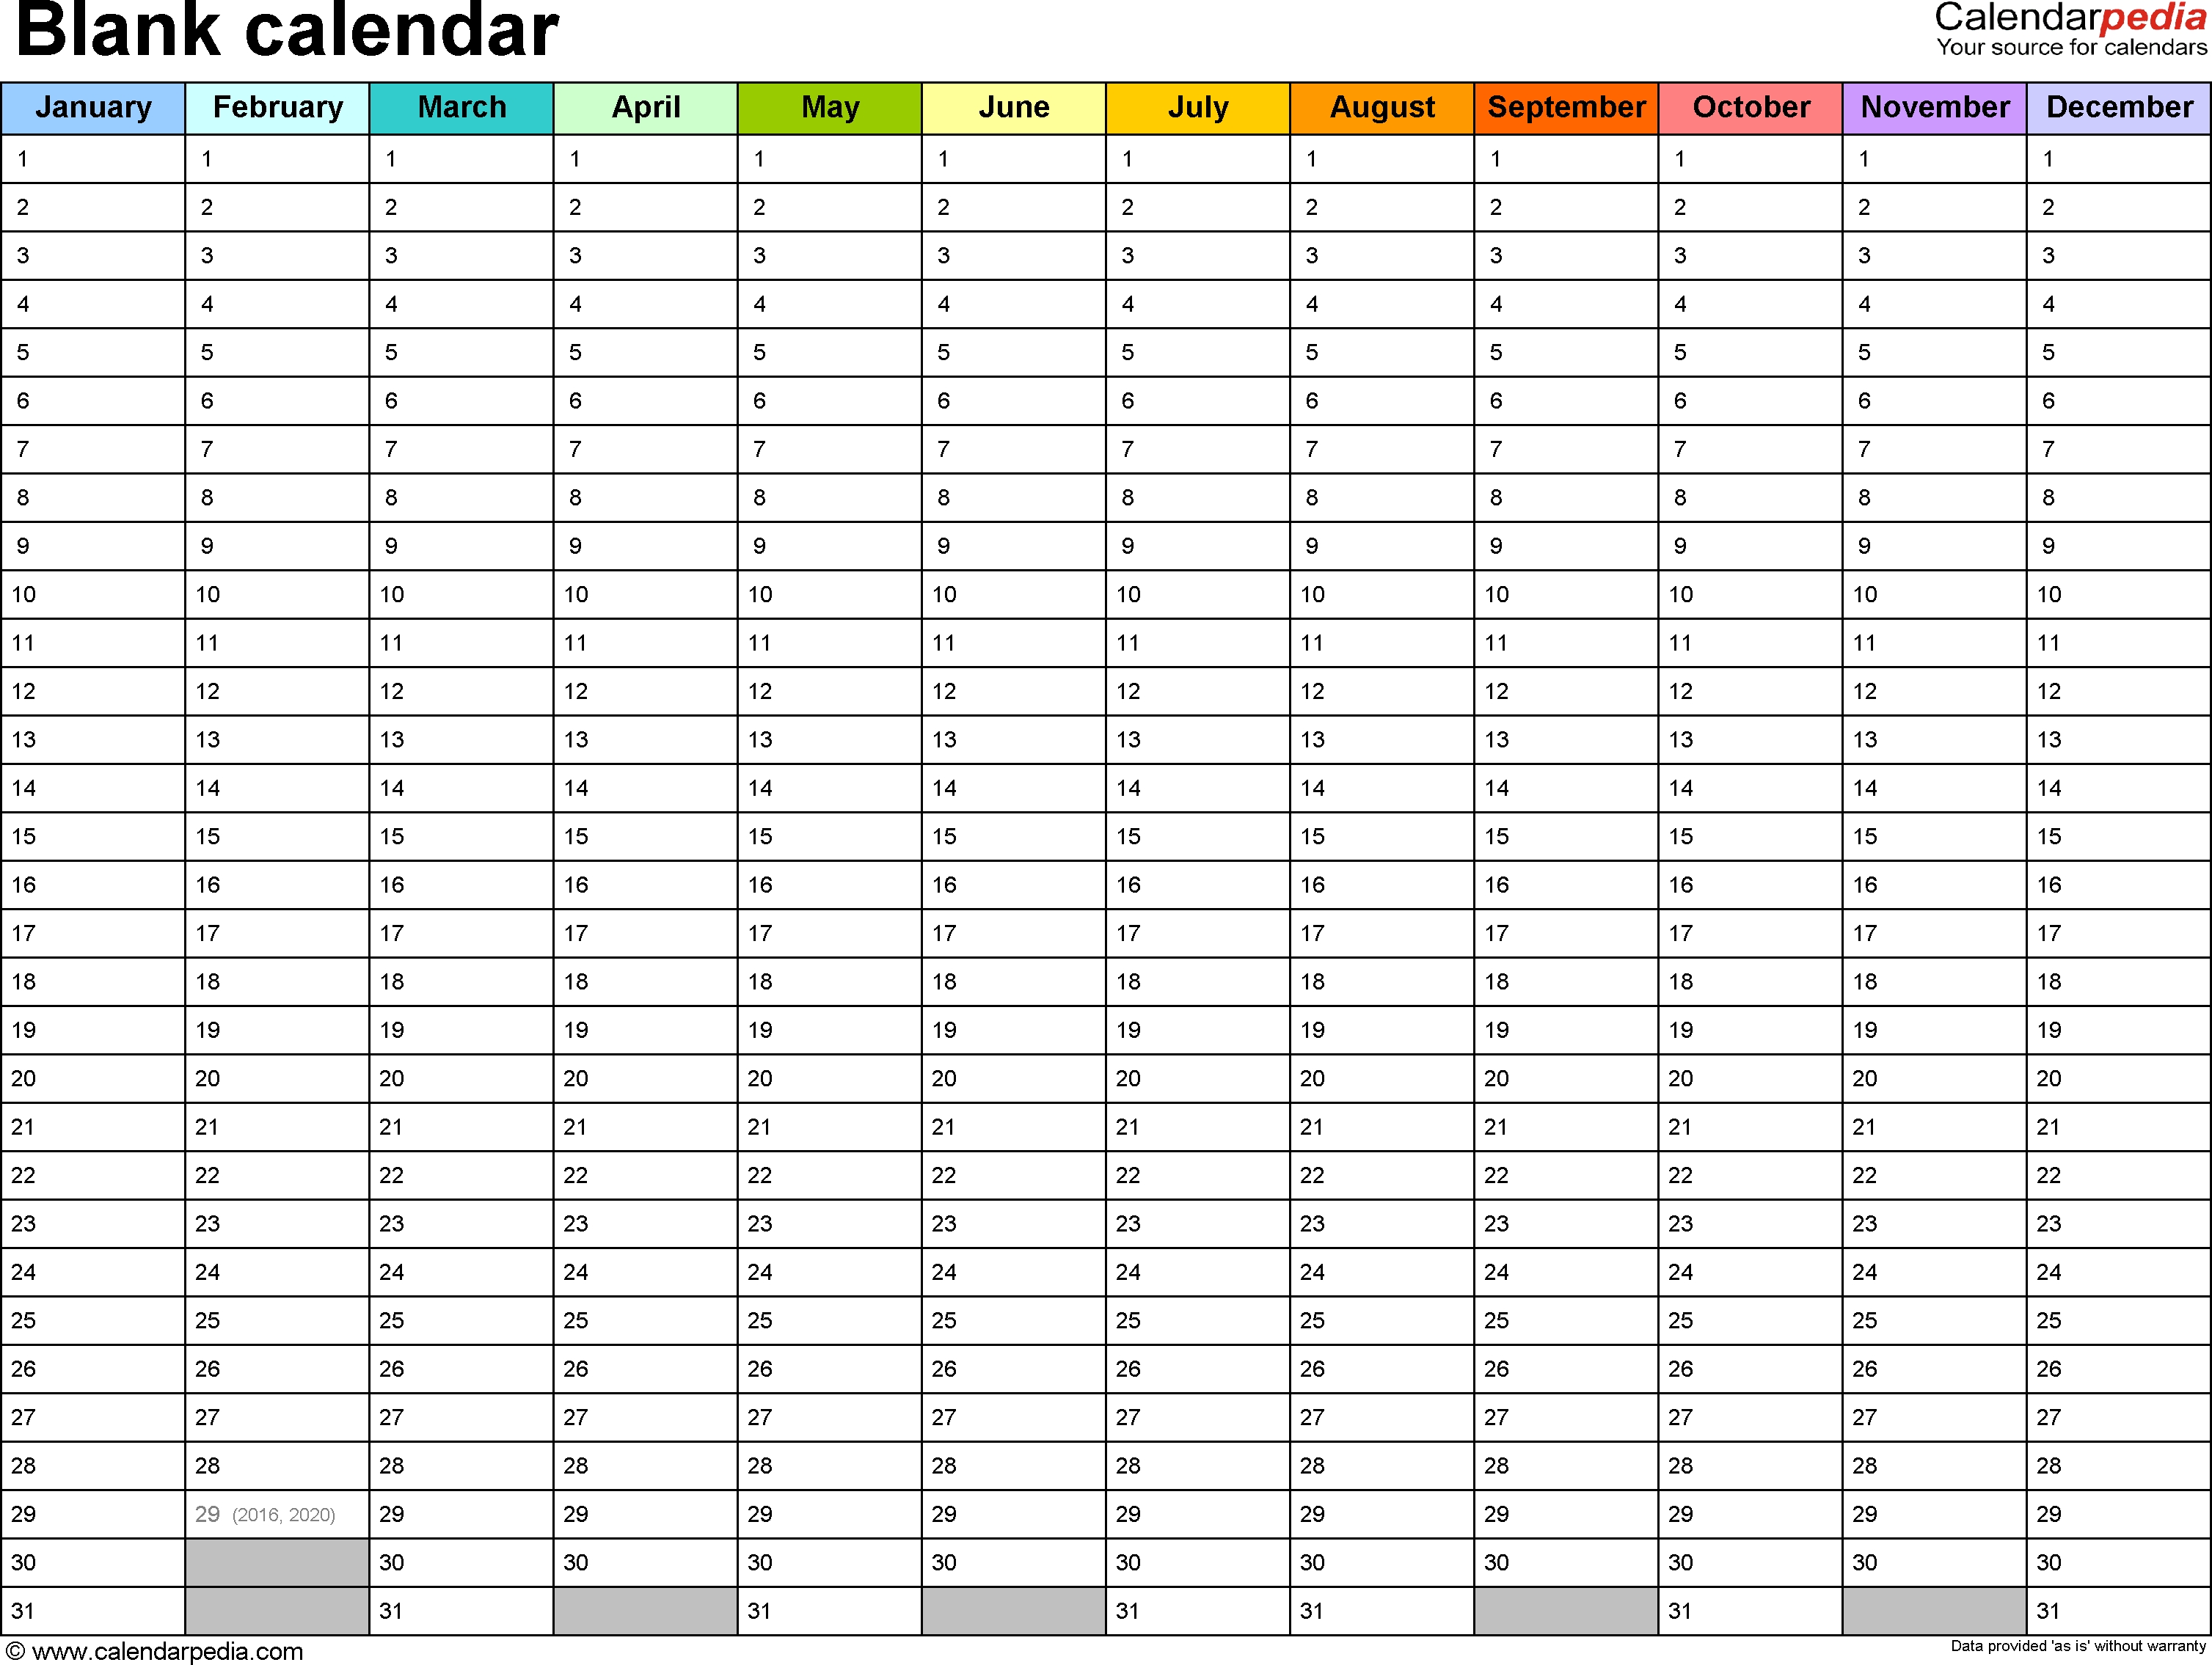 Blank Calendar - 9 Free Printable Microsoft Word Templates regarding Free Printable Blank Calendar Template